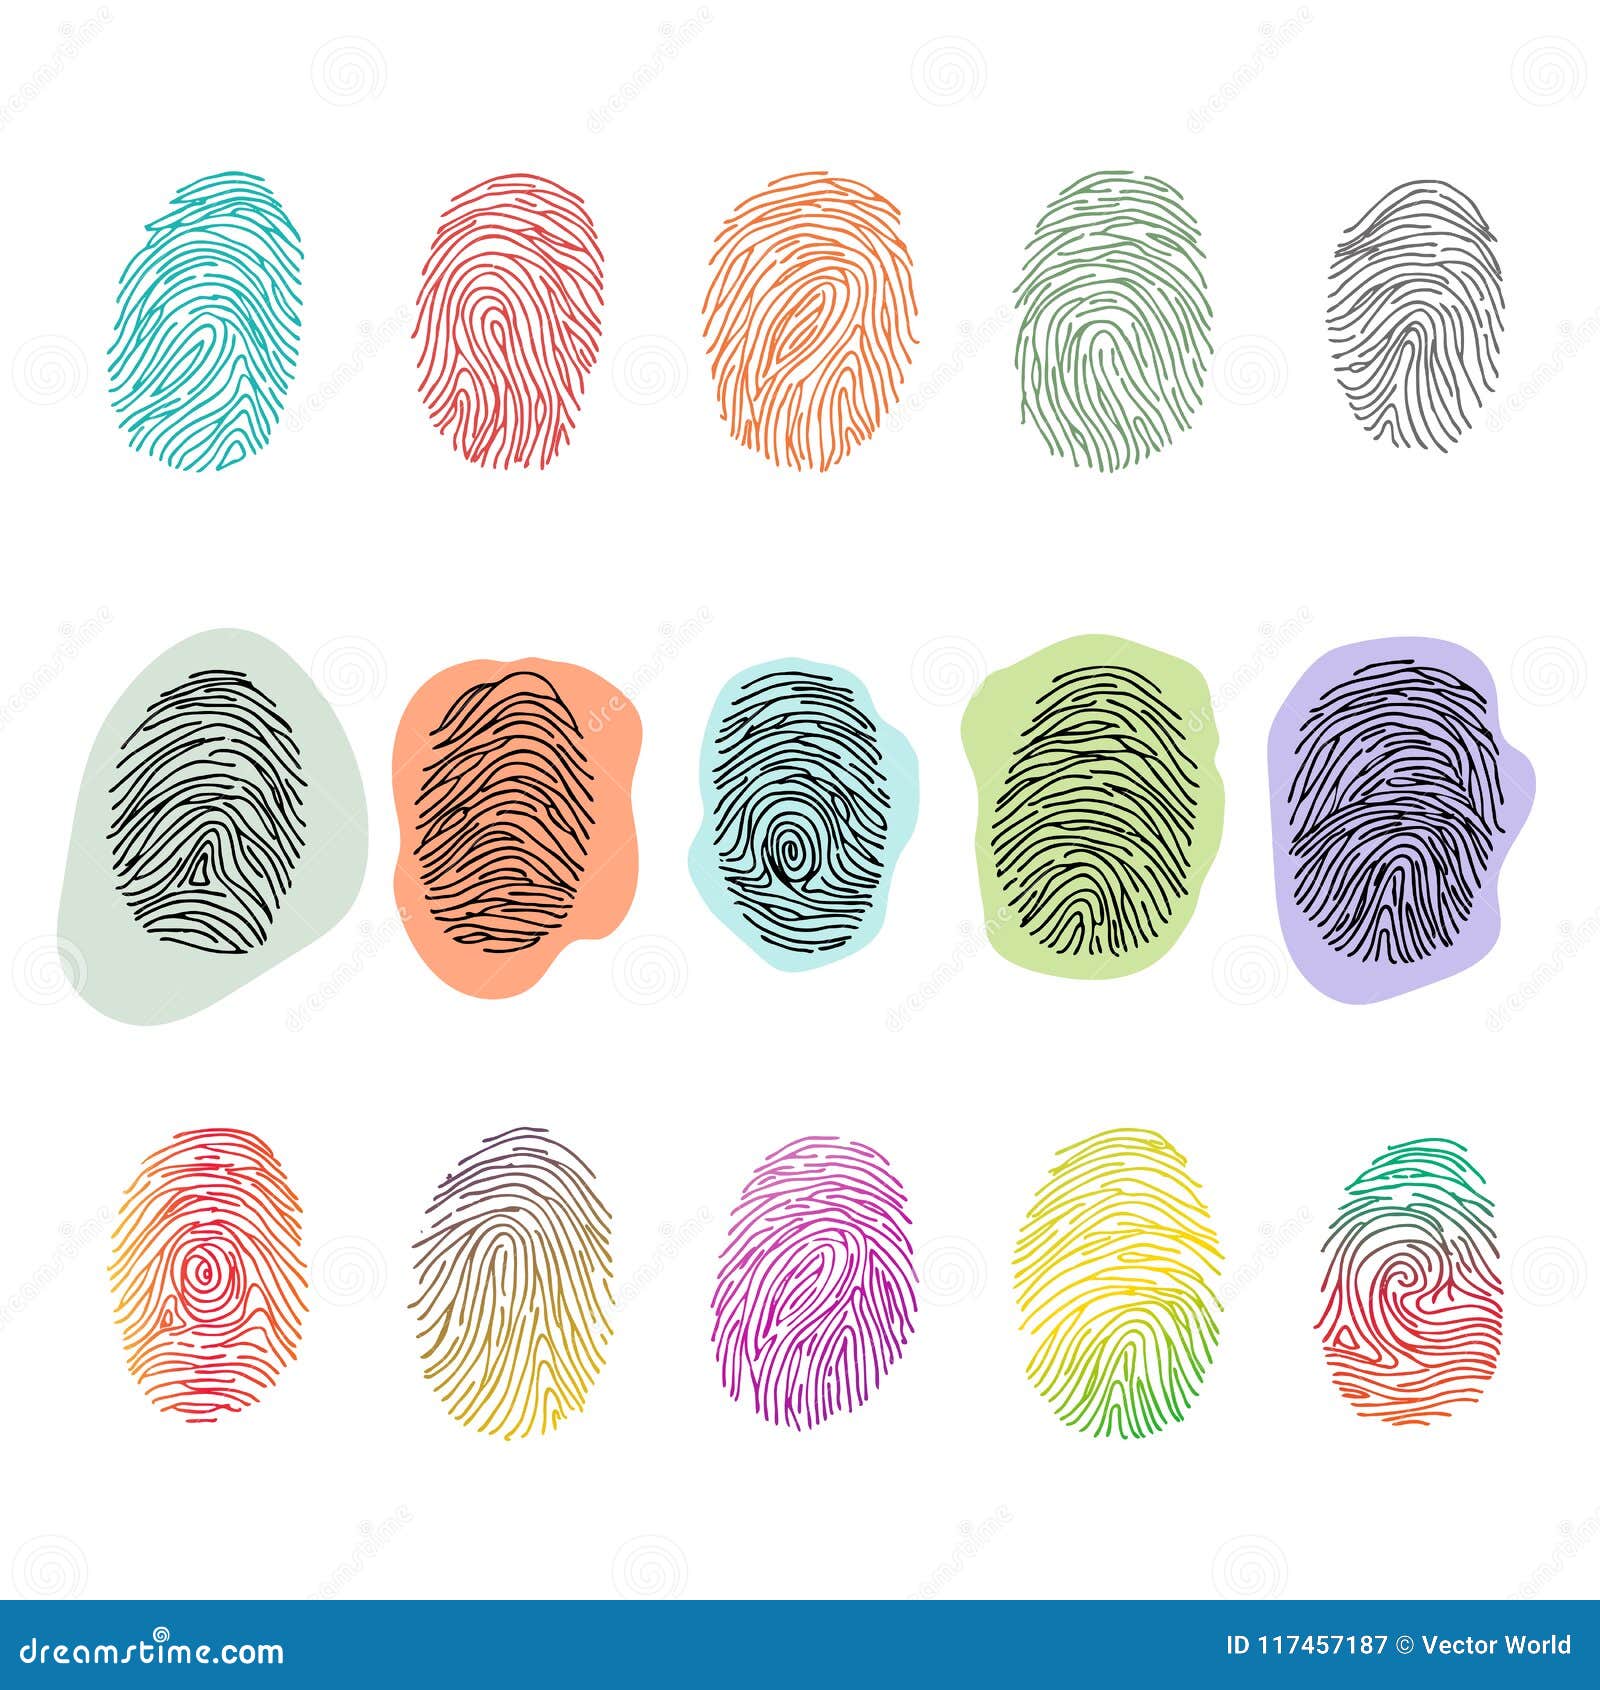 fingerprint  fingerprinting identity with fingertip identification  set of fingering print or security